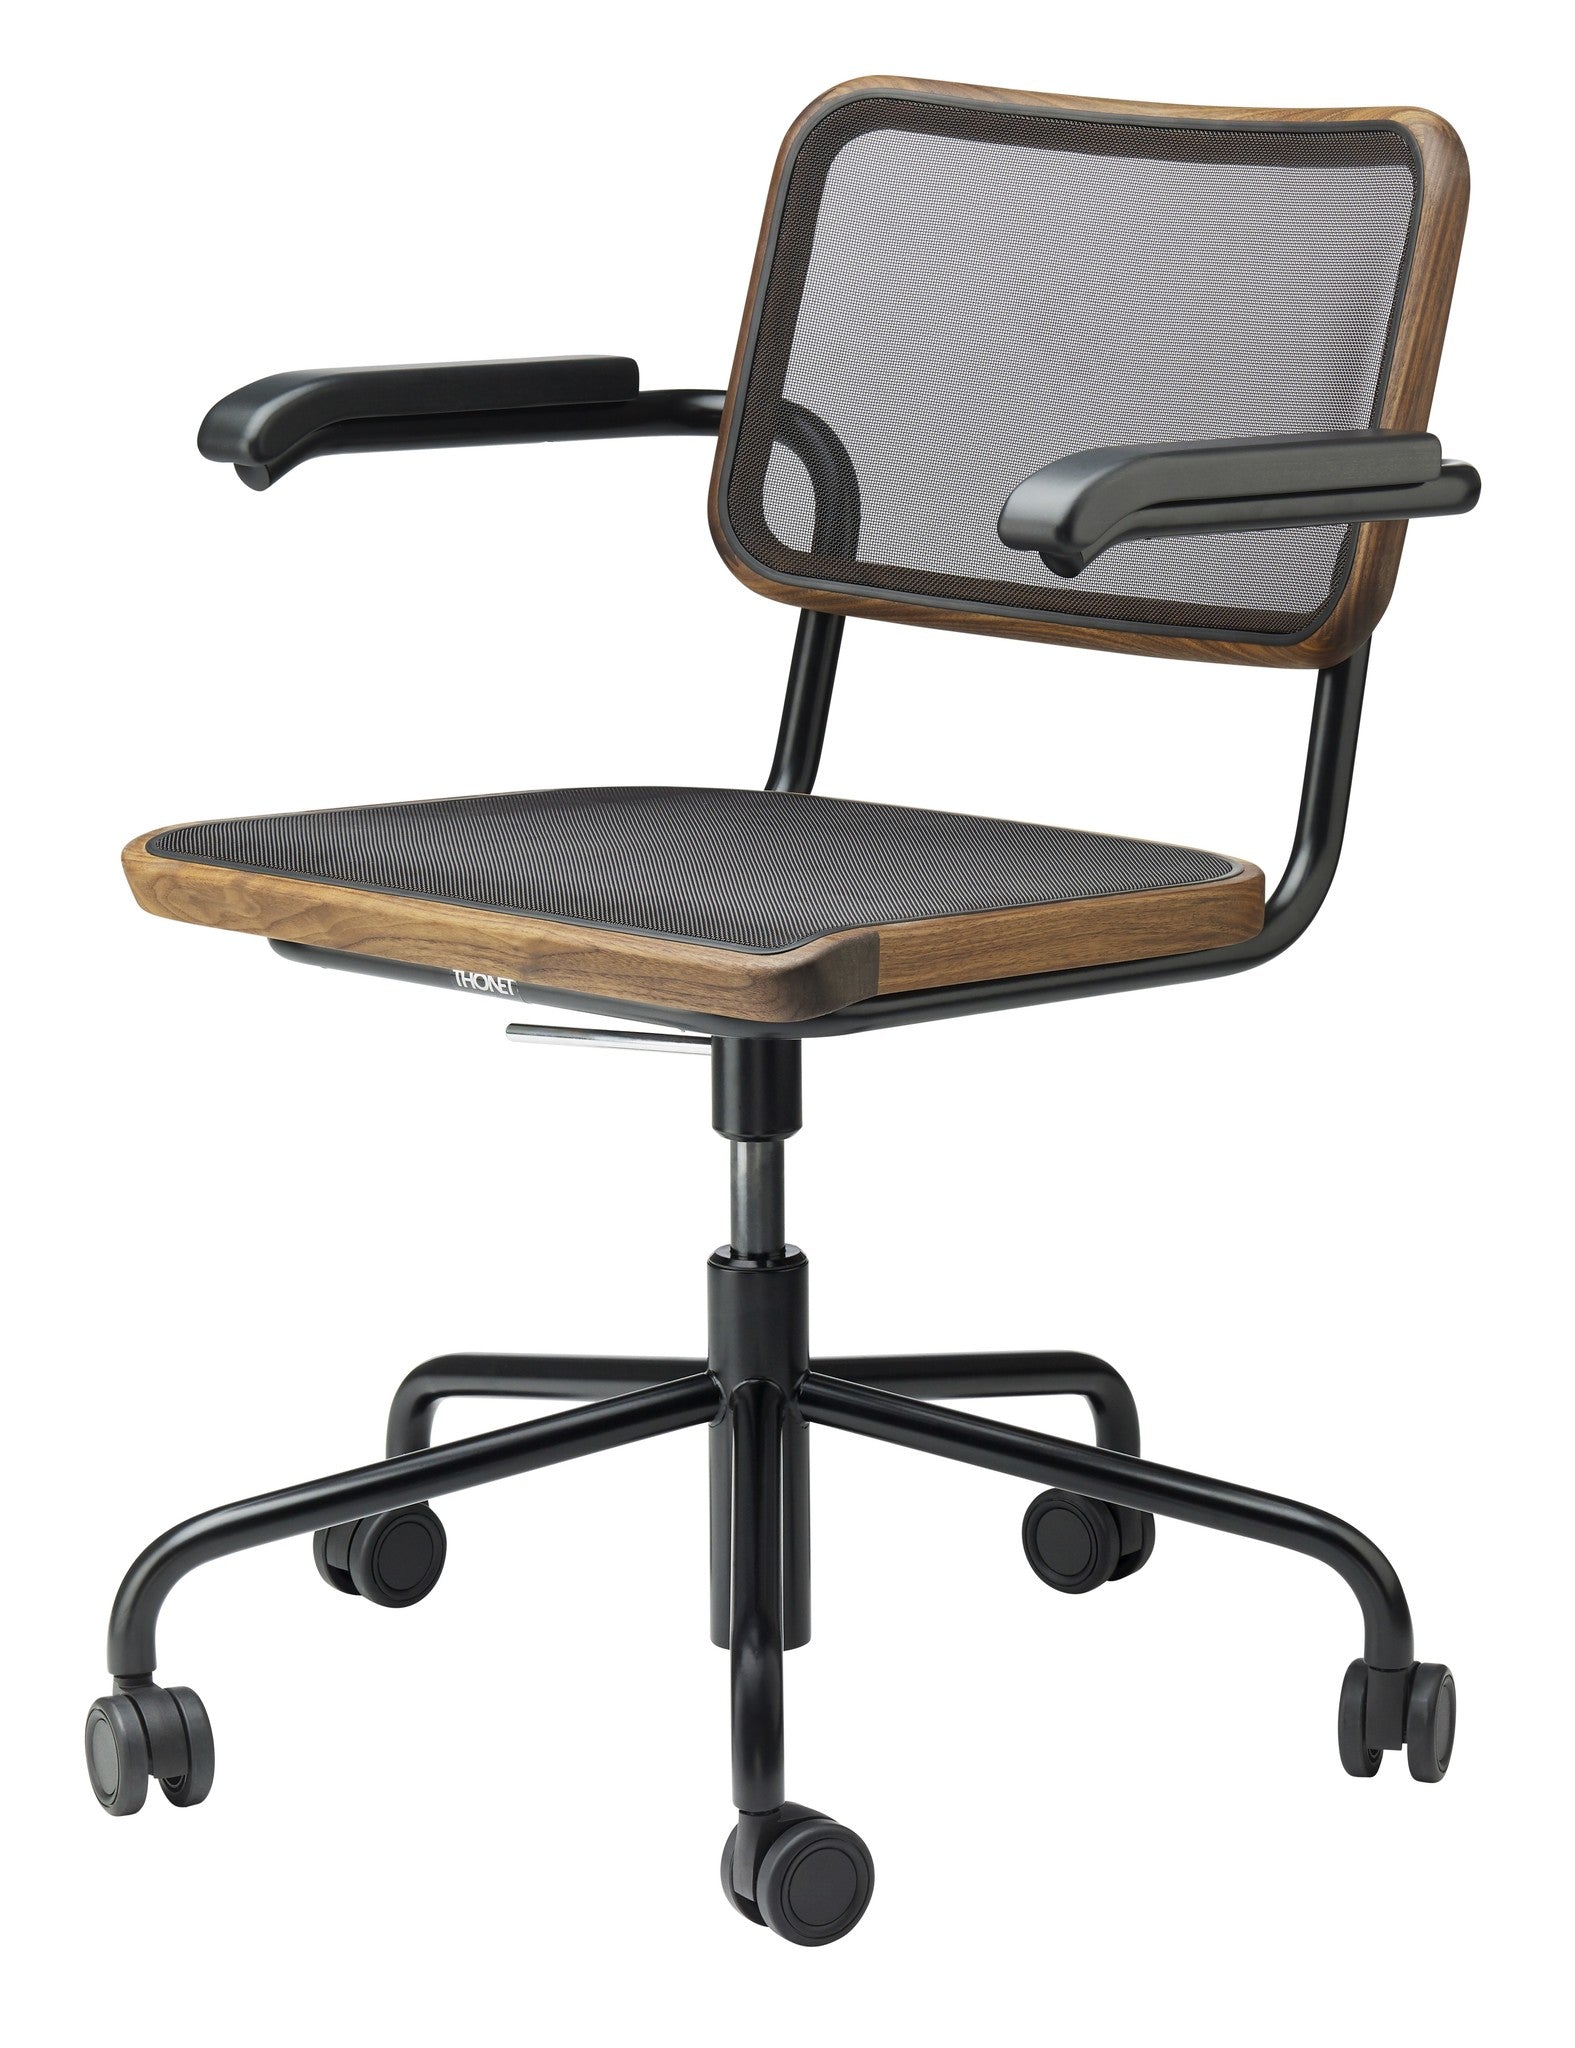 Thonet S 64 NDR Office Chair